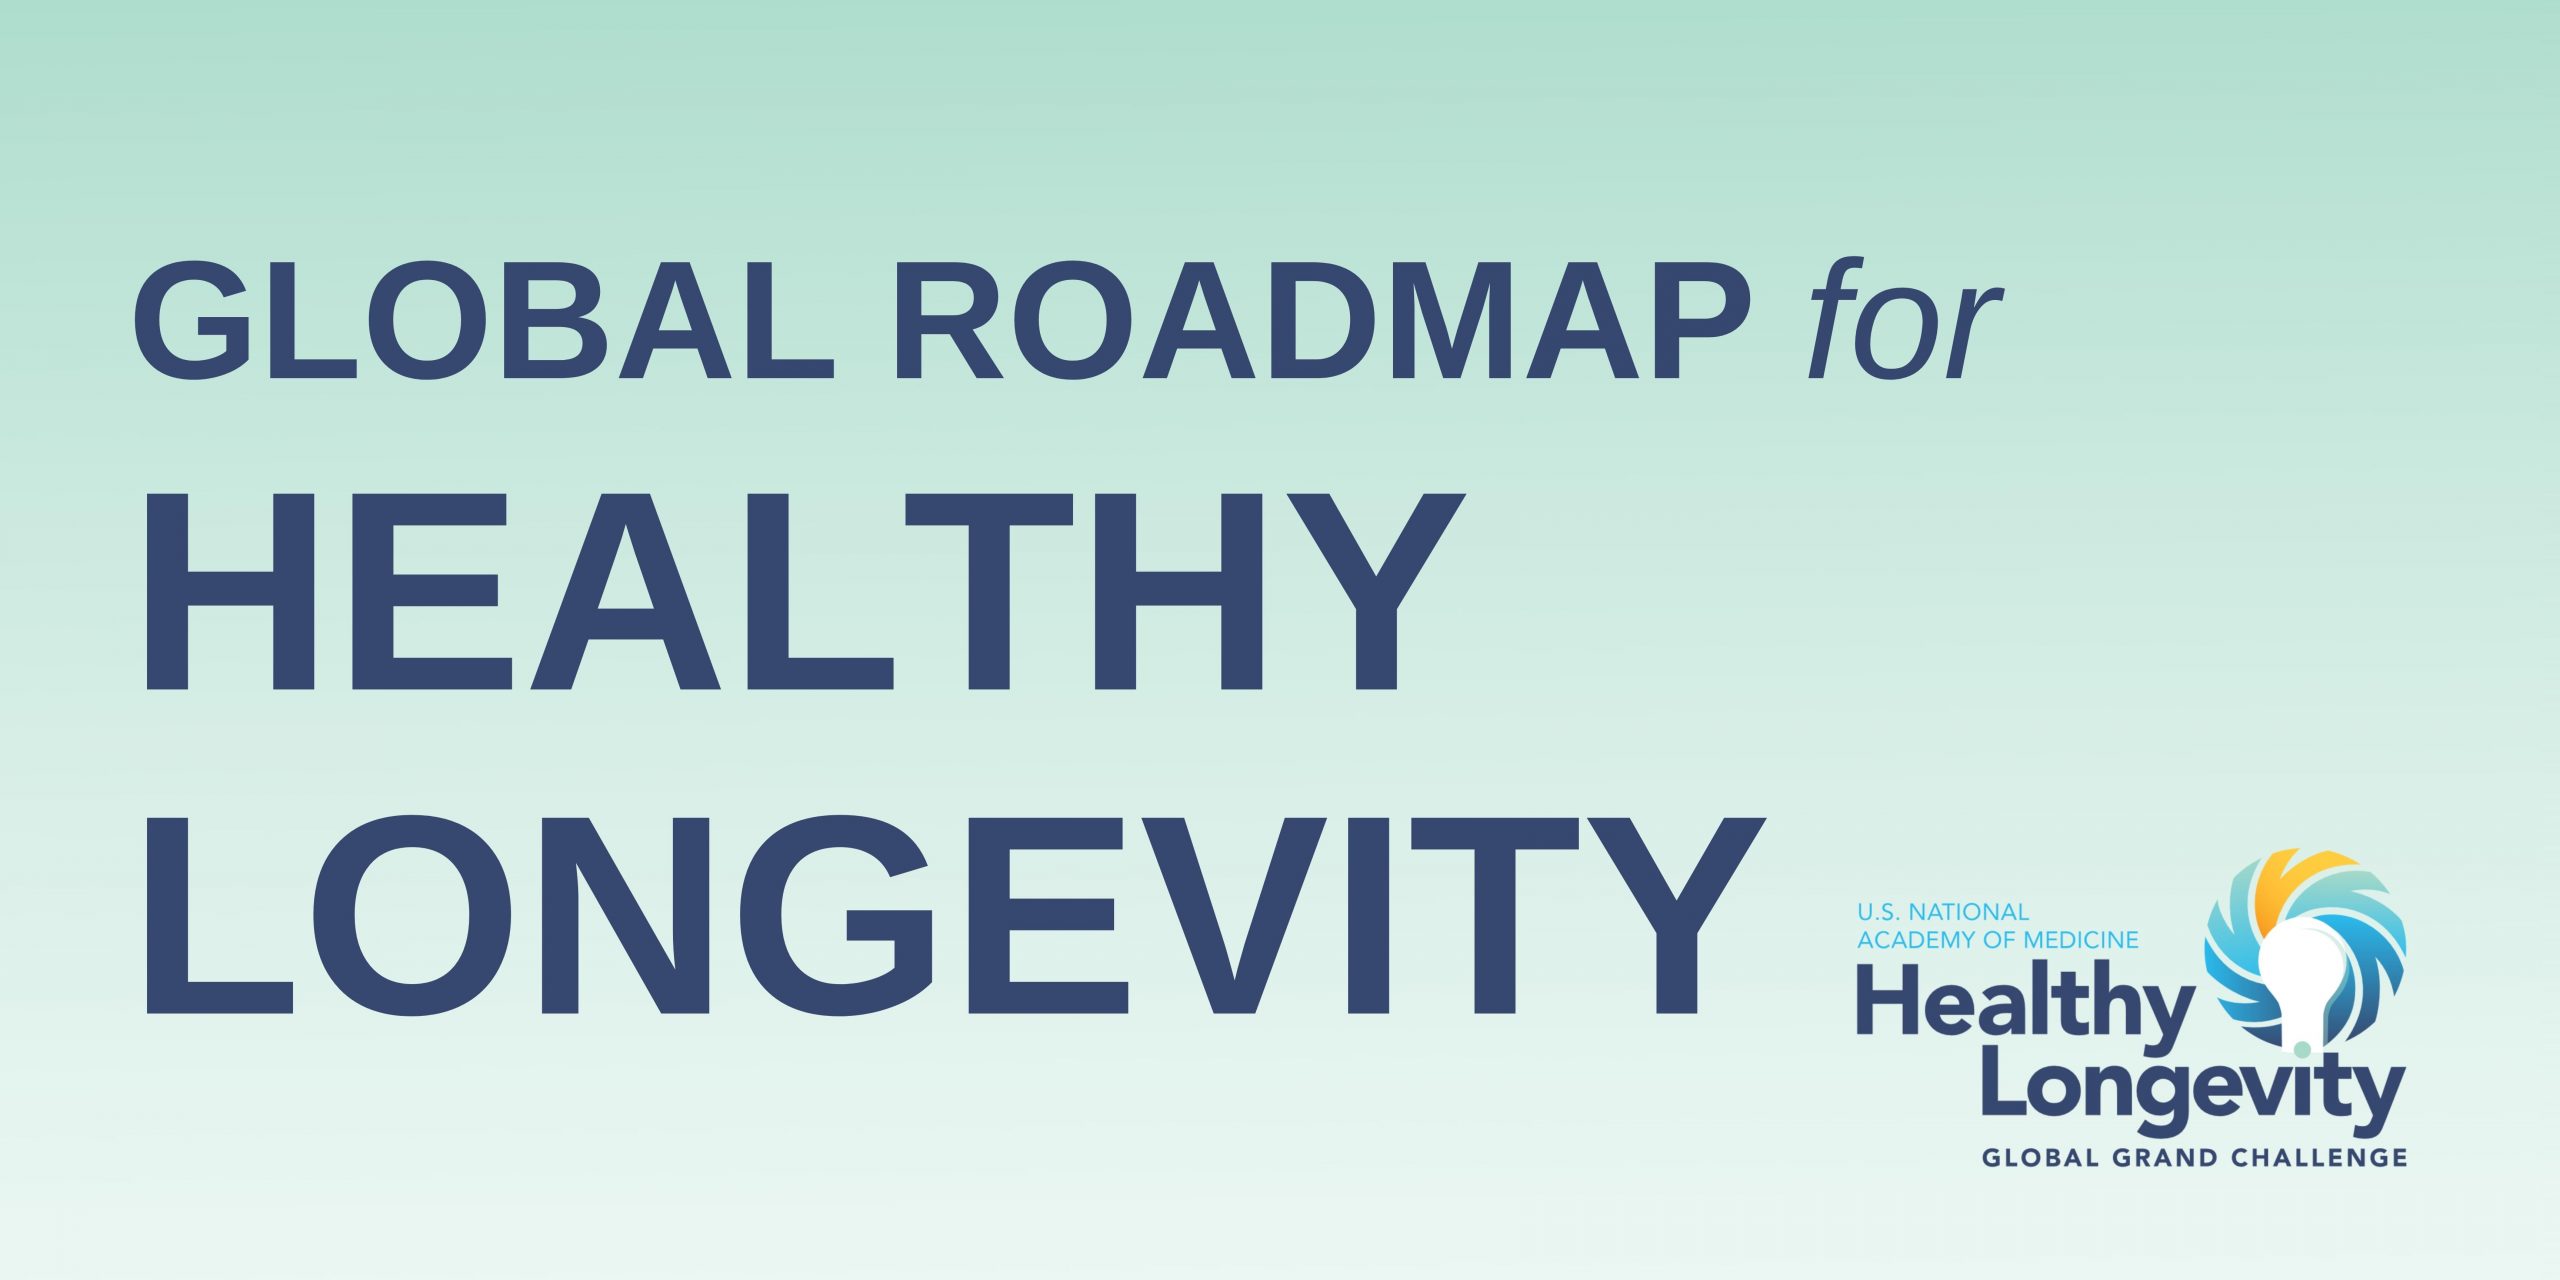 Health and longevity strategies